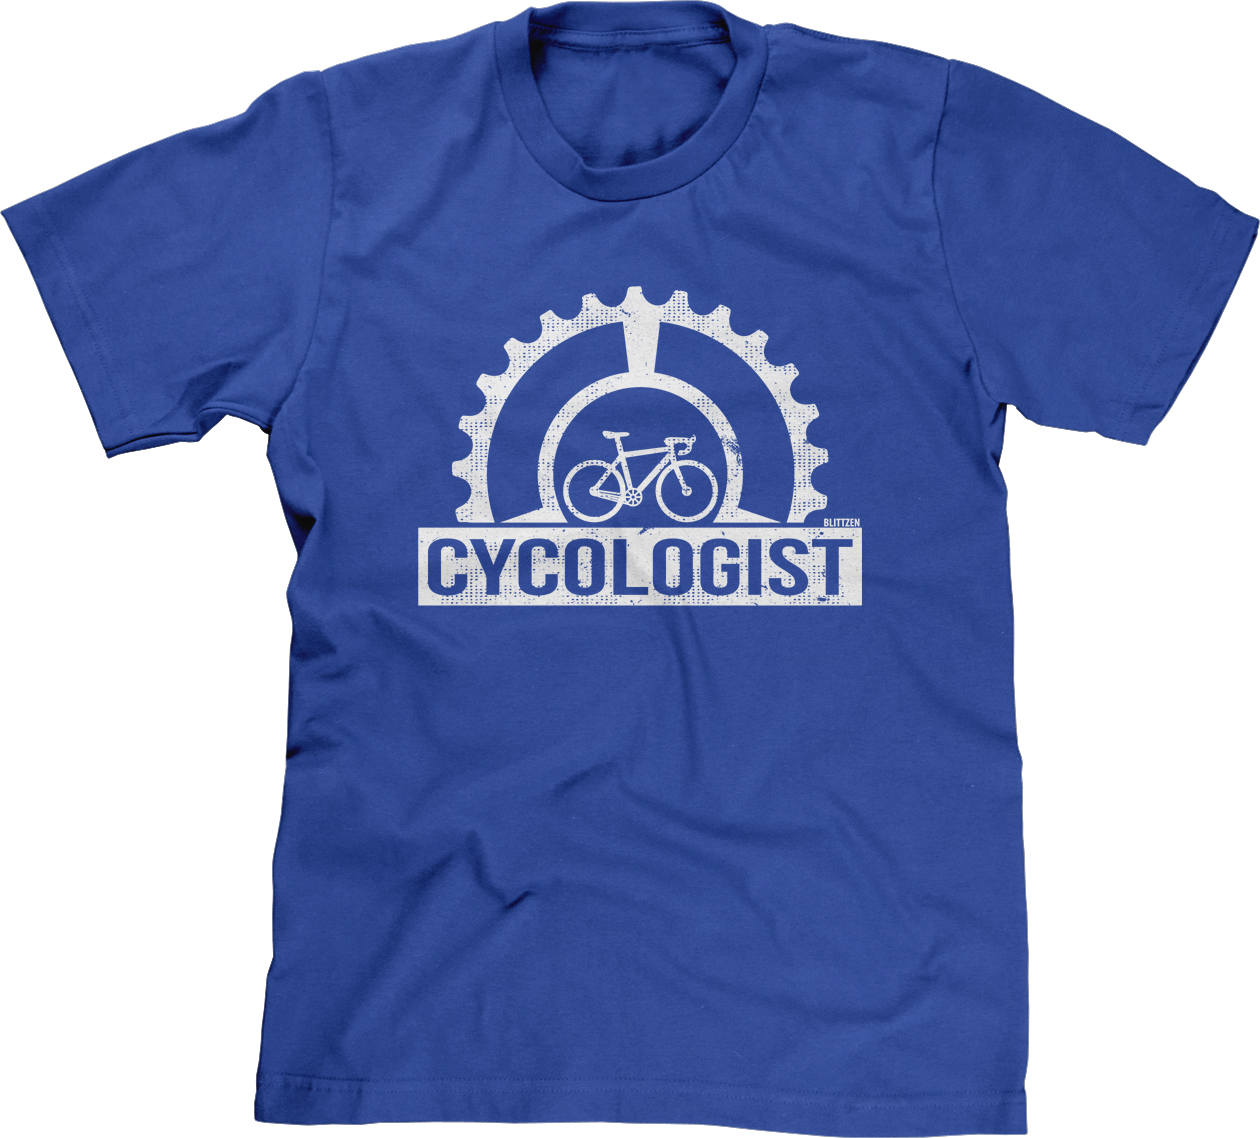 Humorous Cycling Statement Shirt